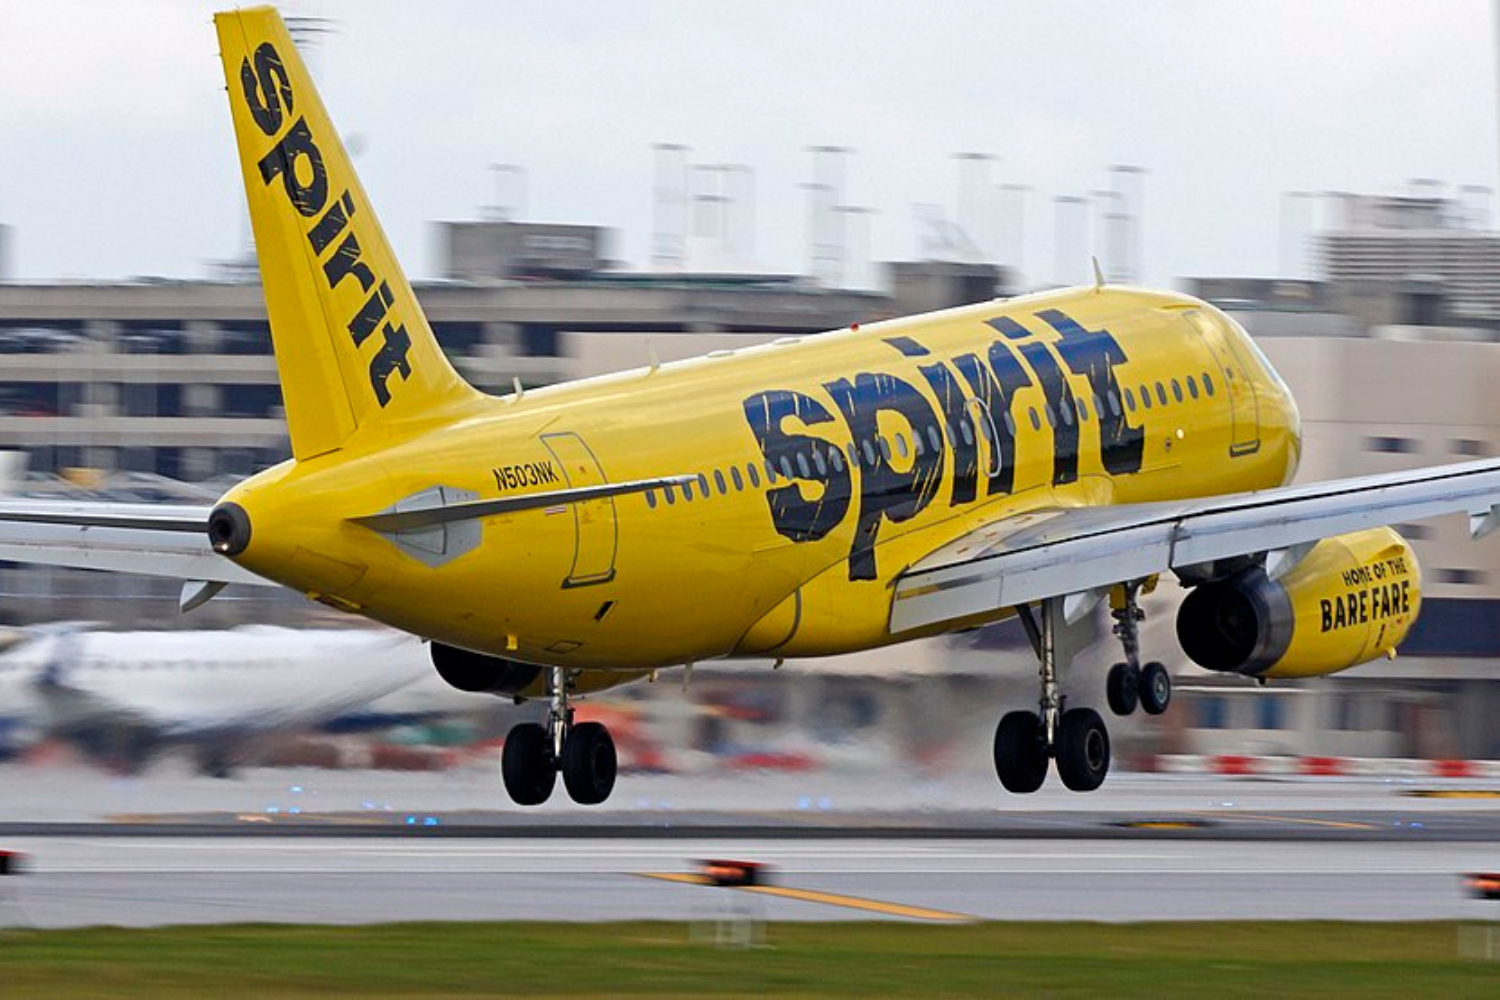 a yellow spirit flight preparing for take off